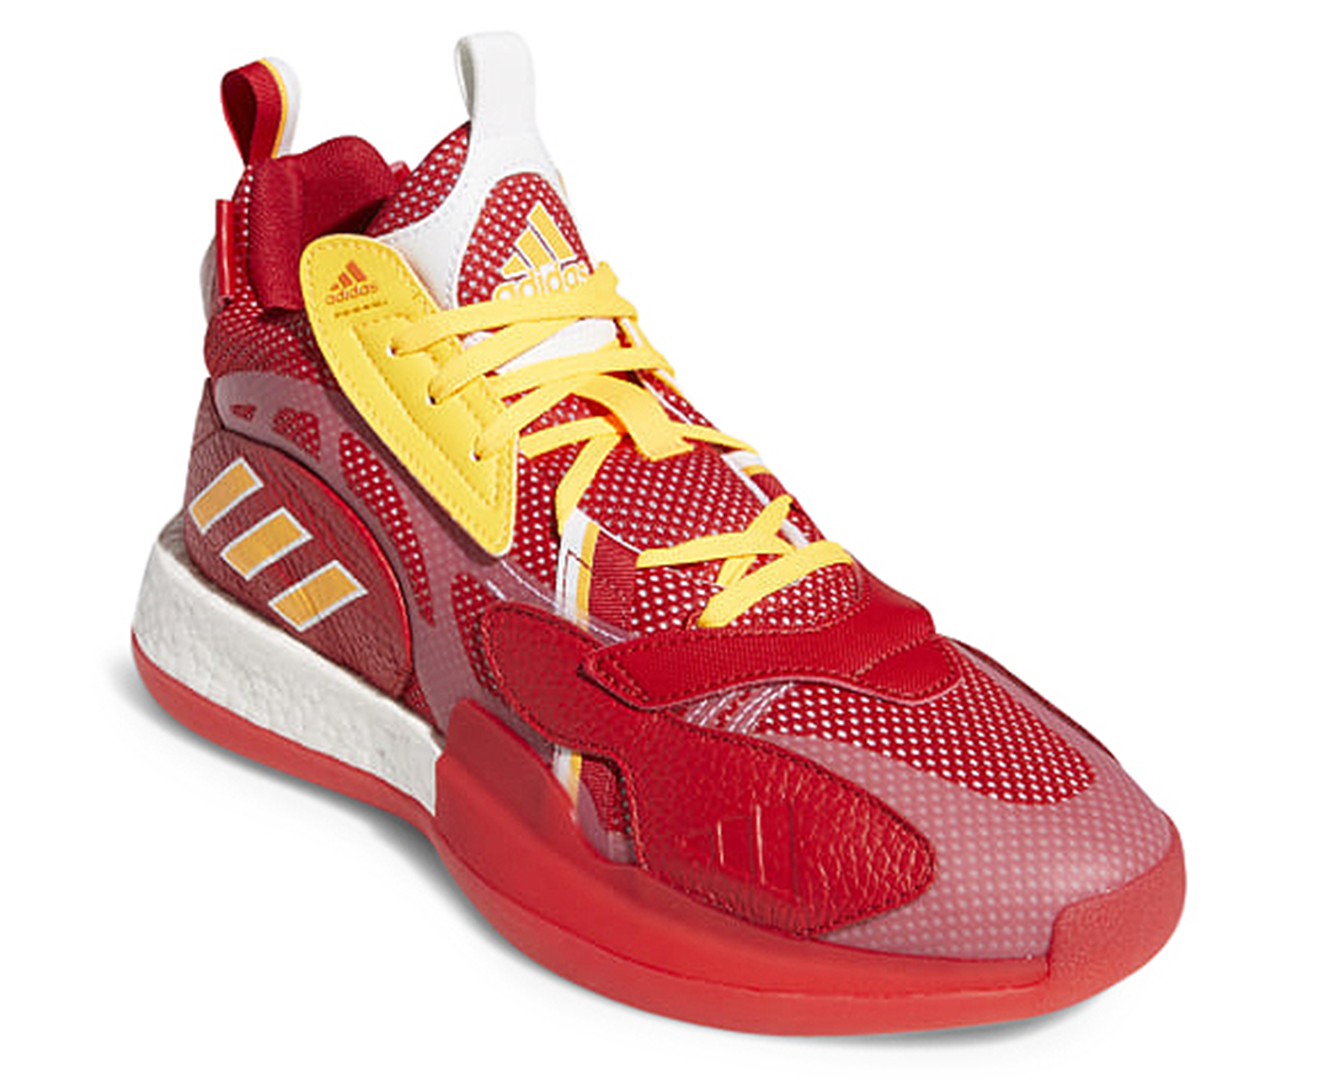 Adidas Men's Zoneboost Basketball Shoes - Team Collegiate Red/Solar Gold/Cloud White | Catch.com.au